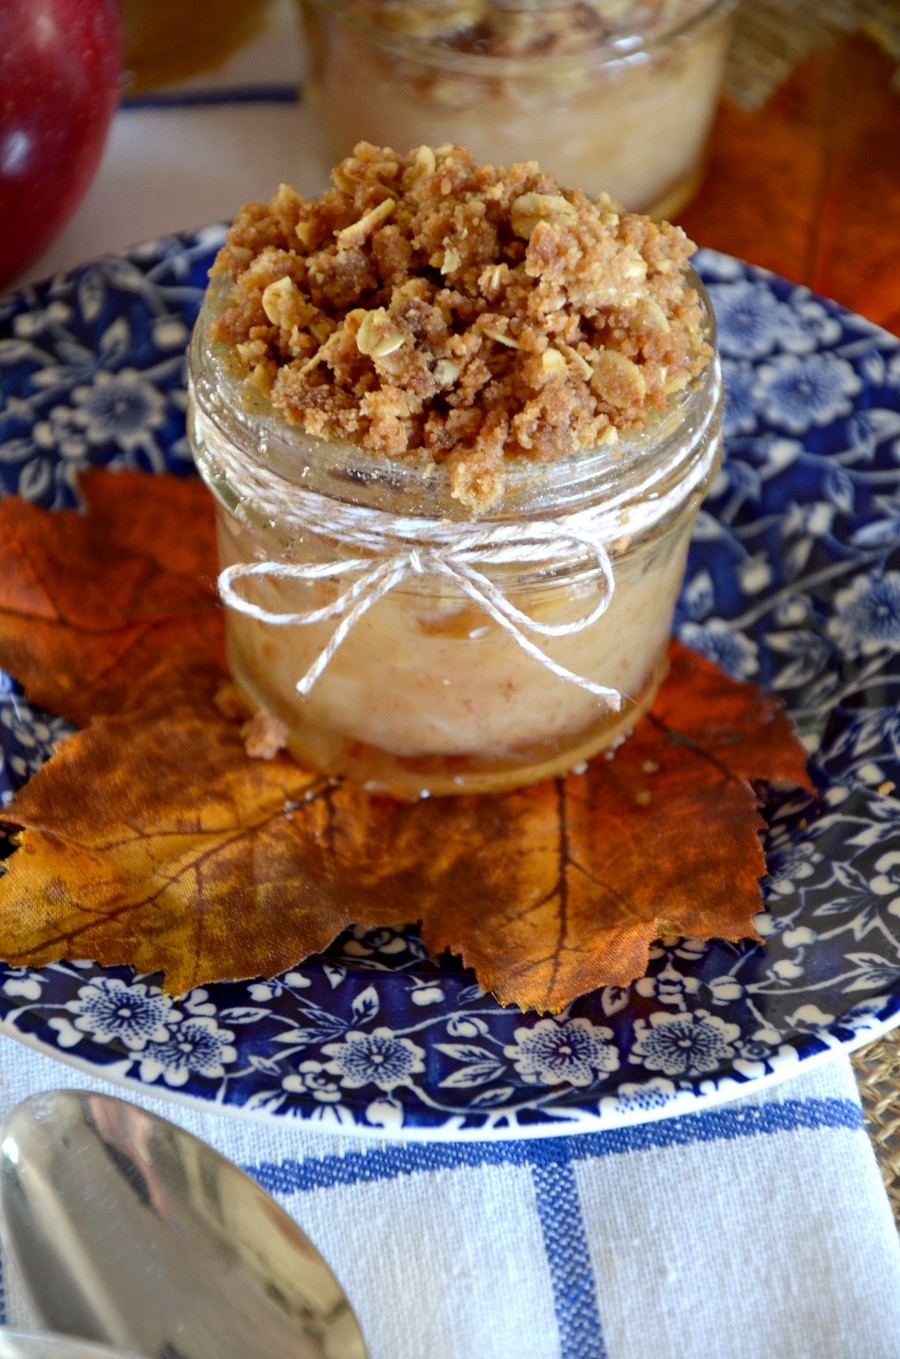 APPLE CRISP IN MASON JARS-Classic, scrumptious apple crisp in cute jars!- A very fun fall dessert-stonegableblog.com